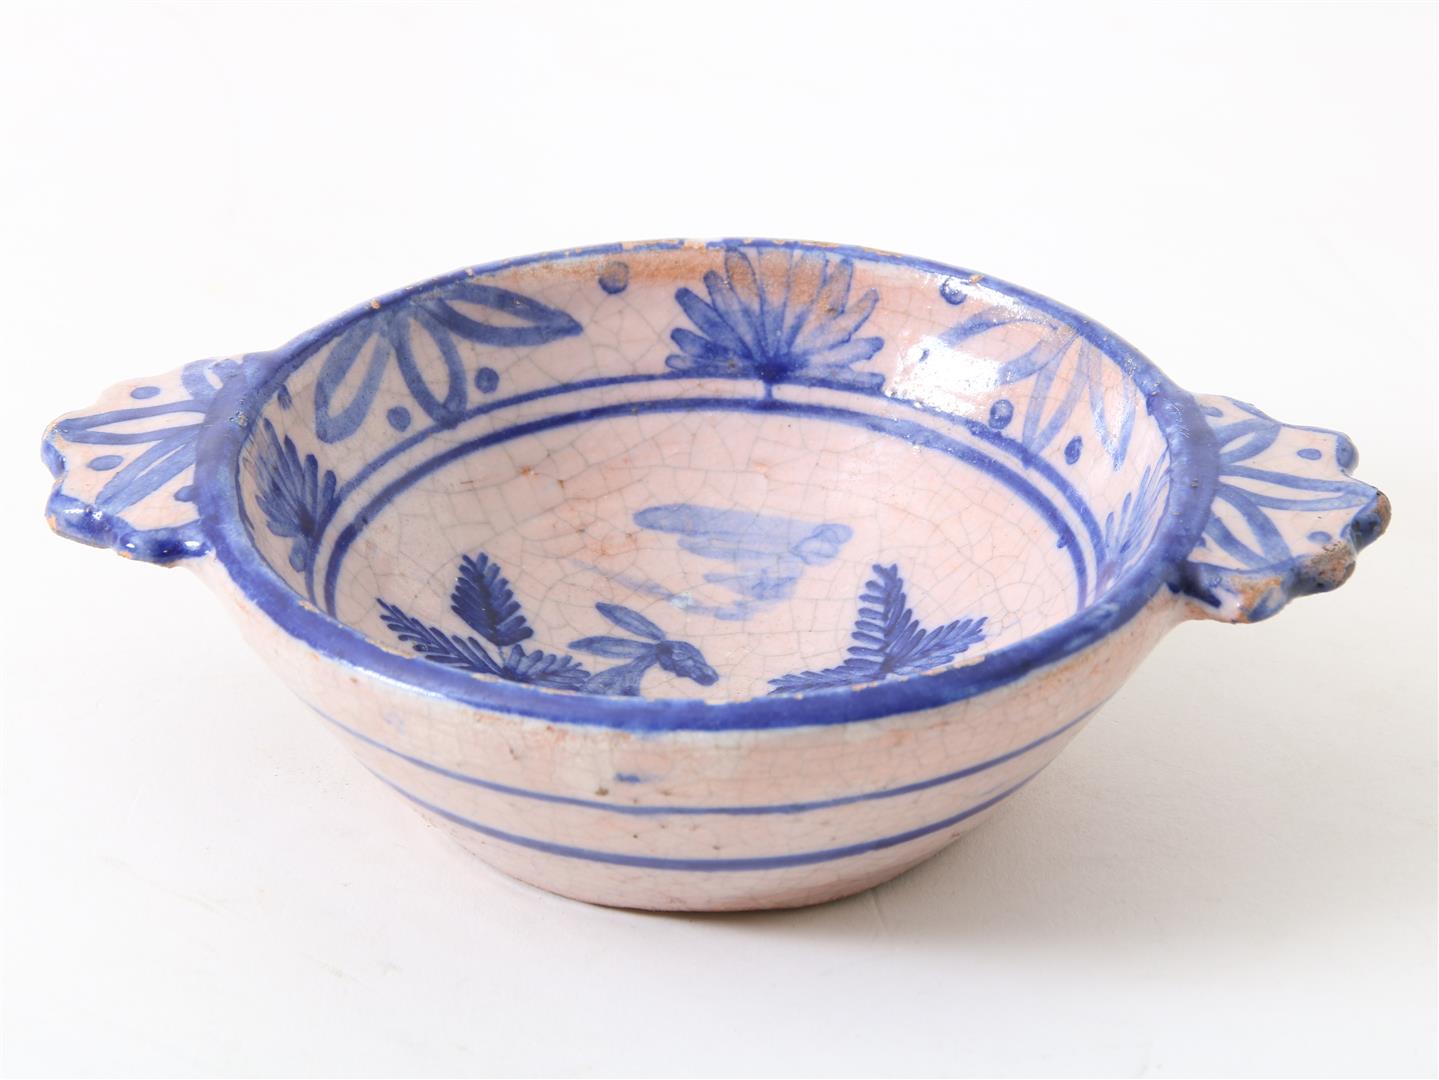 Majolica porridge bowl, Southern Europe, probably 19th century, diameter 13 cm.